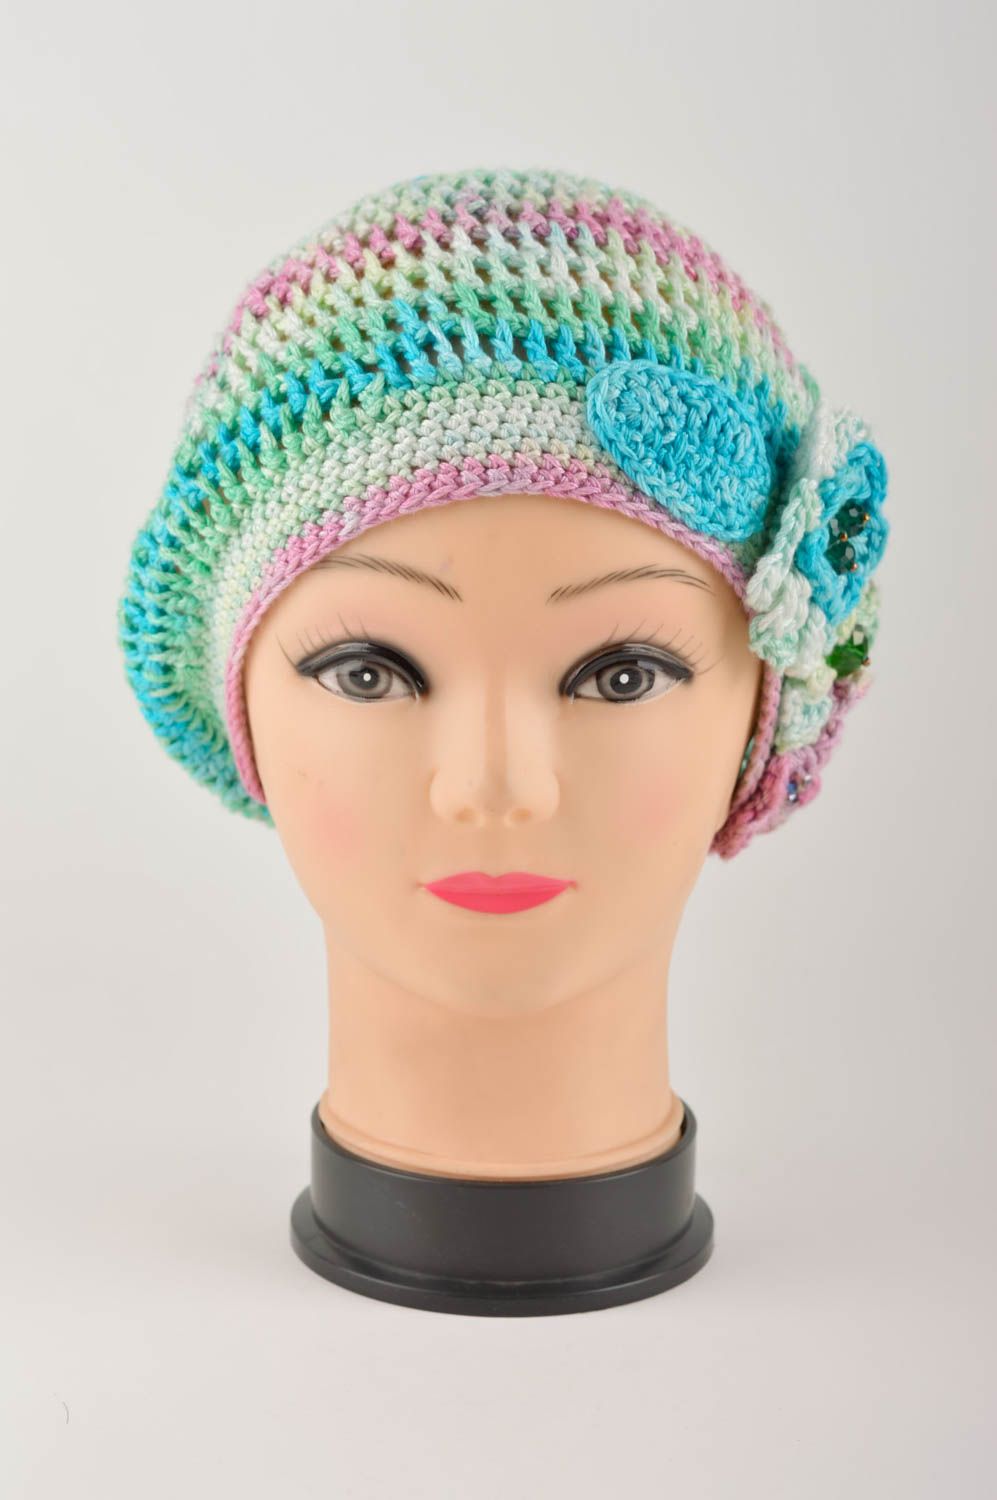 Handmade beret hat crochet beret designer accessories for women gifts for girls photo 3